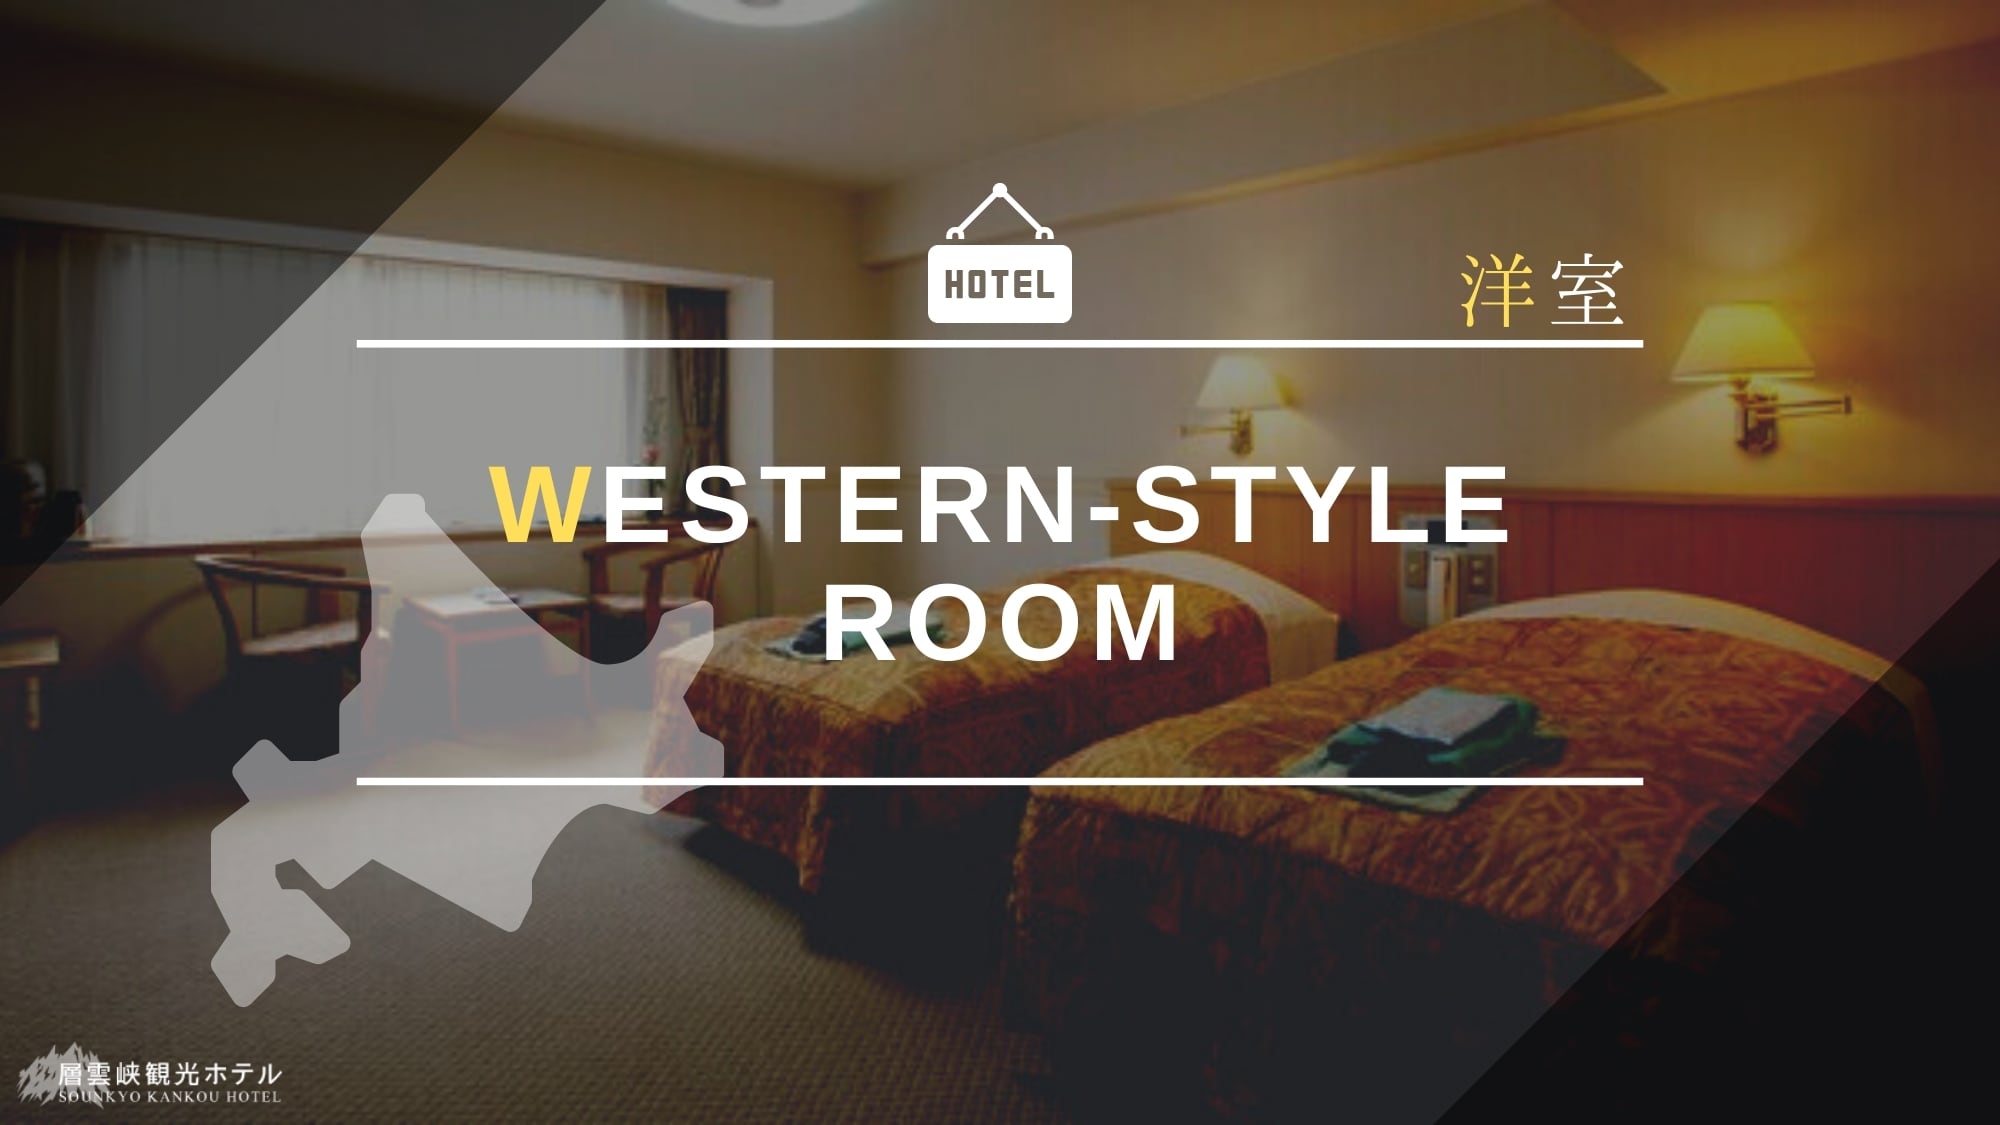 Western-style room